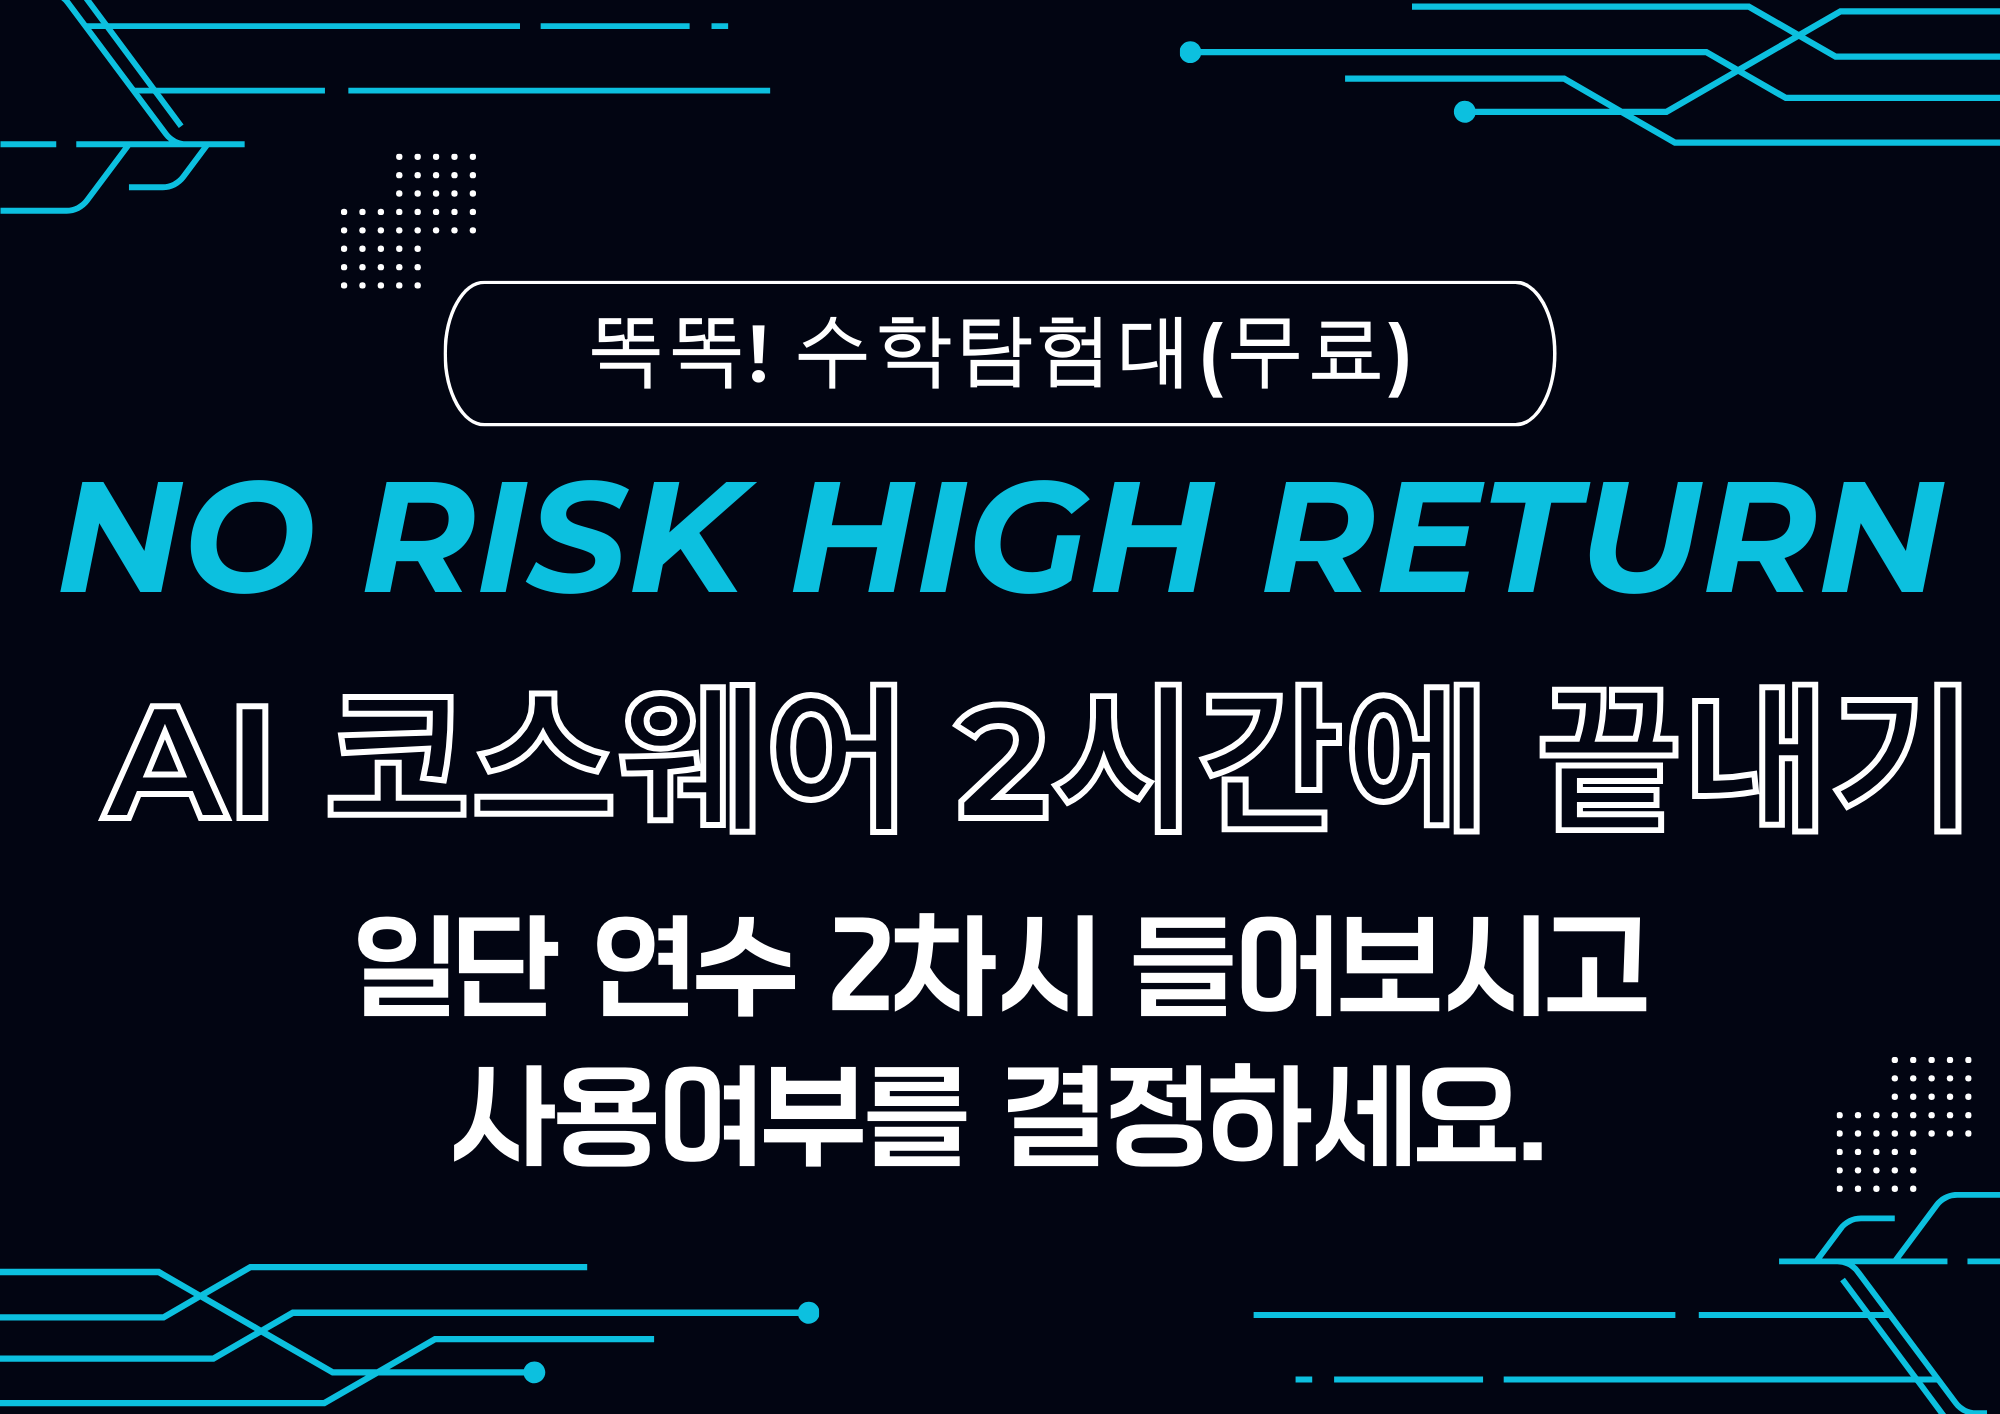 No Risk High Return, AI 코스웨어 2시간에 끝내기(2기)